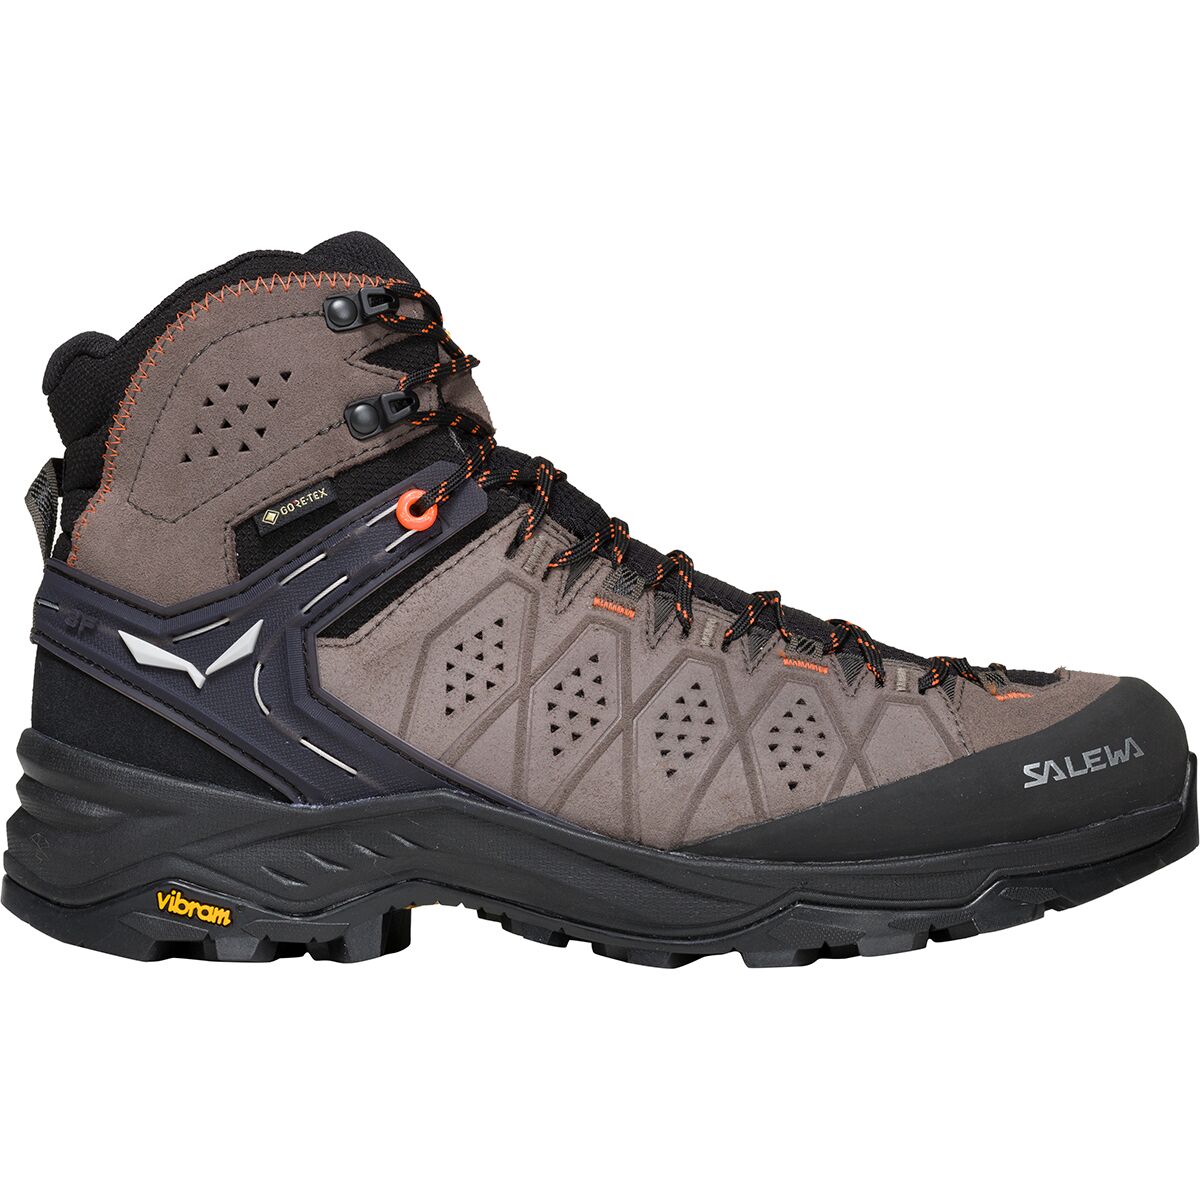 Alp Trainer 2 Mid GTX Hiking Boot - Men